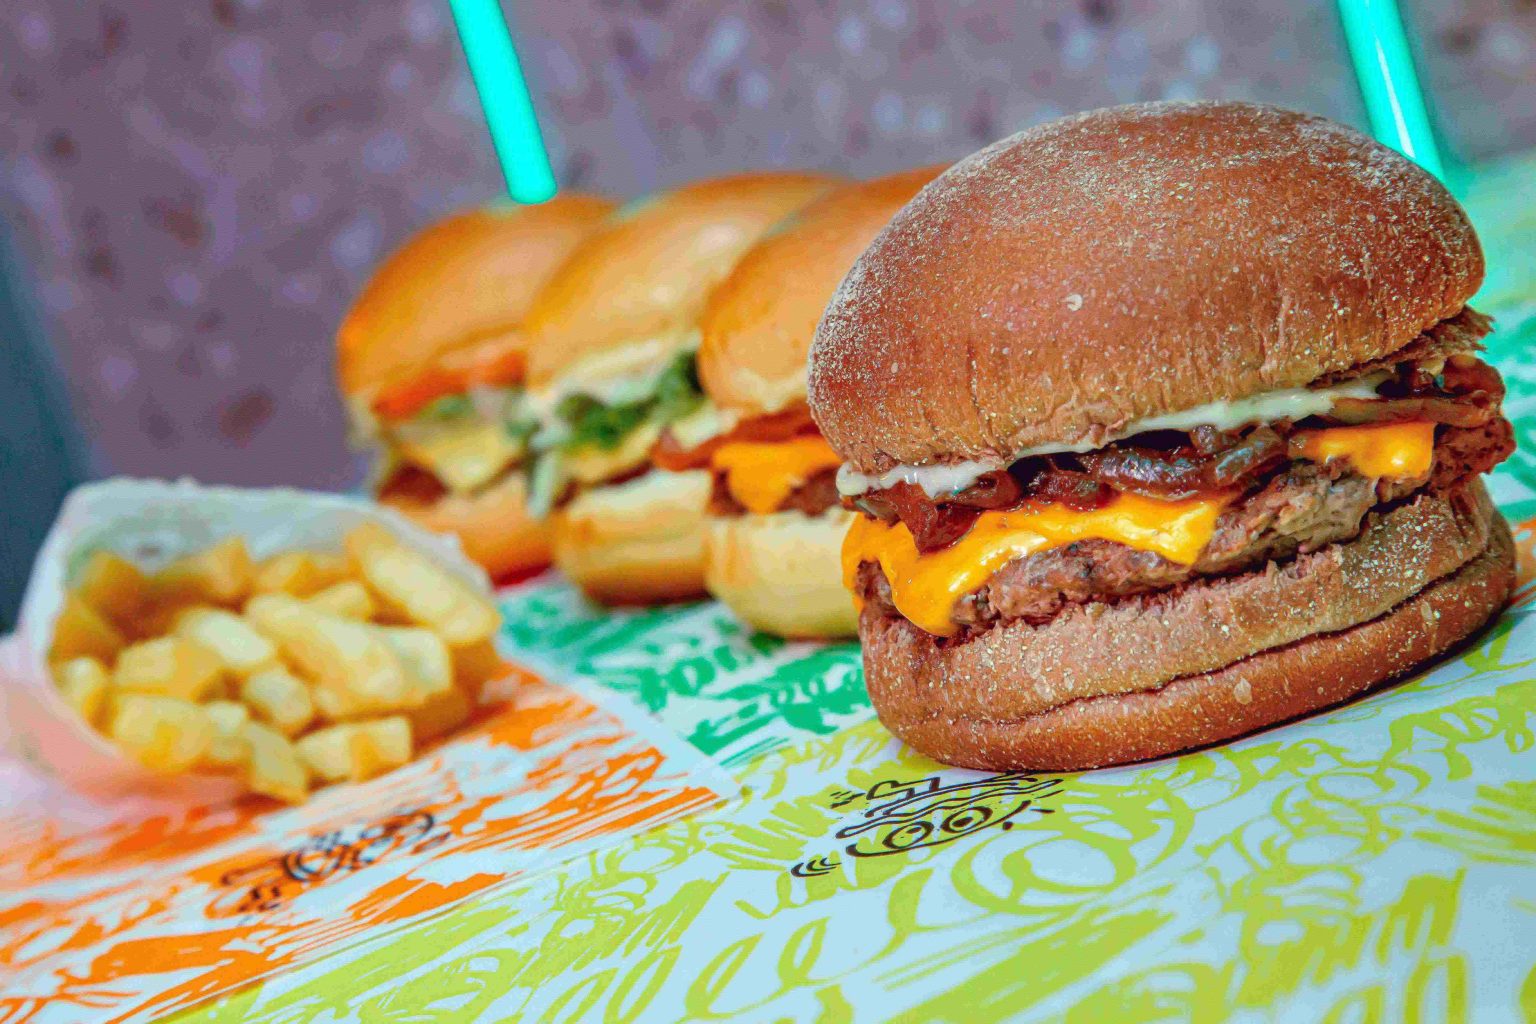 Smash burger casas apostam na tendência do hambúrguer prensado A Brasília